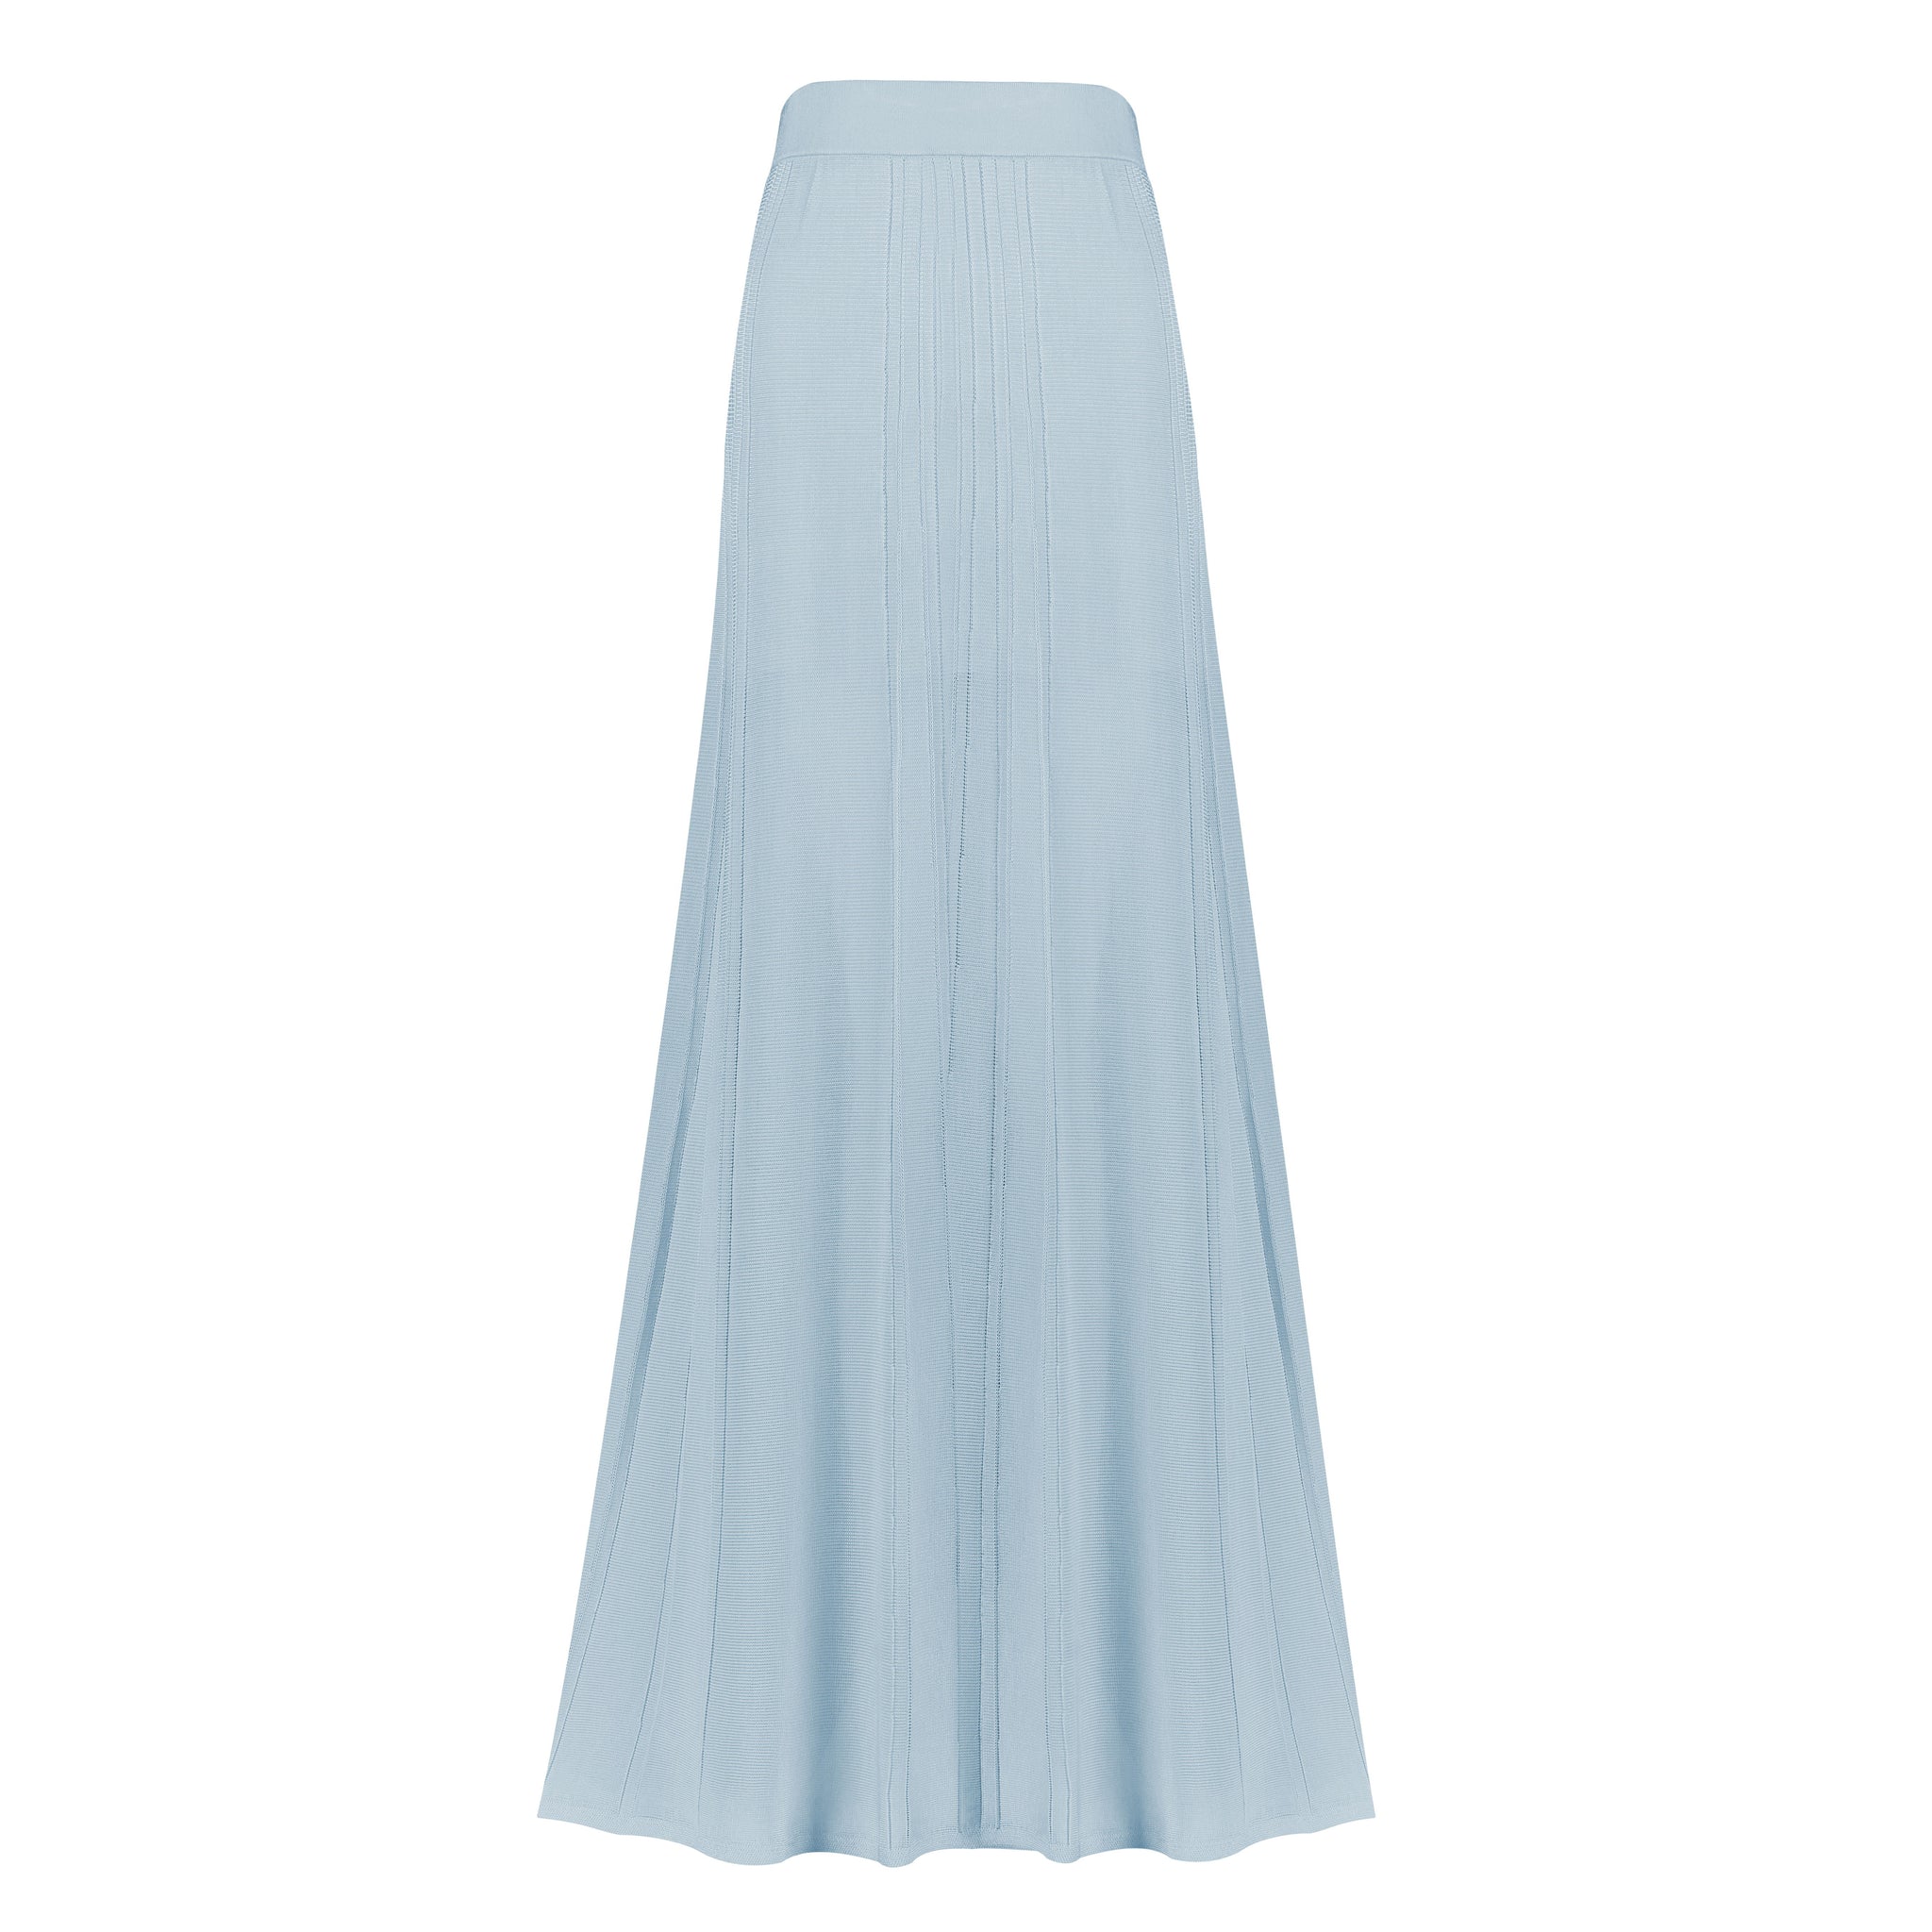 Fleur Knit Skirt - Light Teal